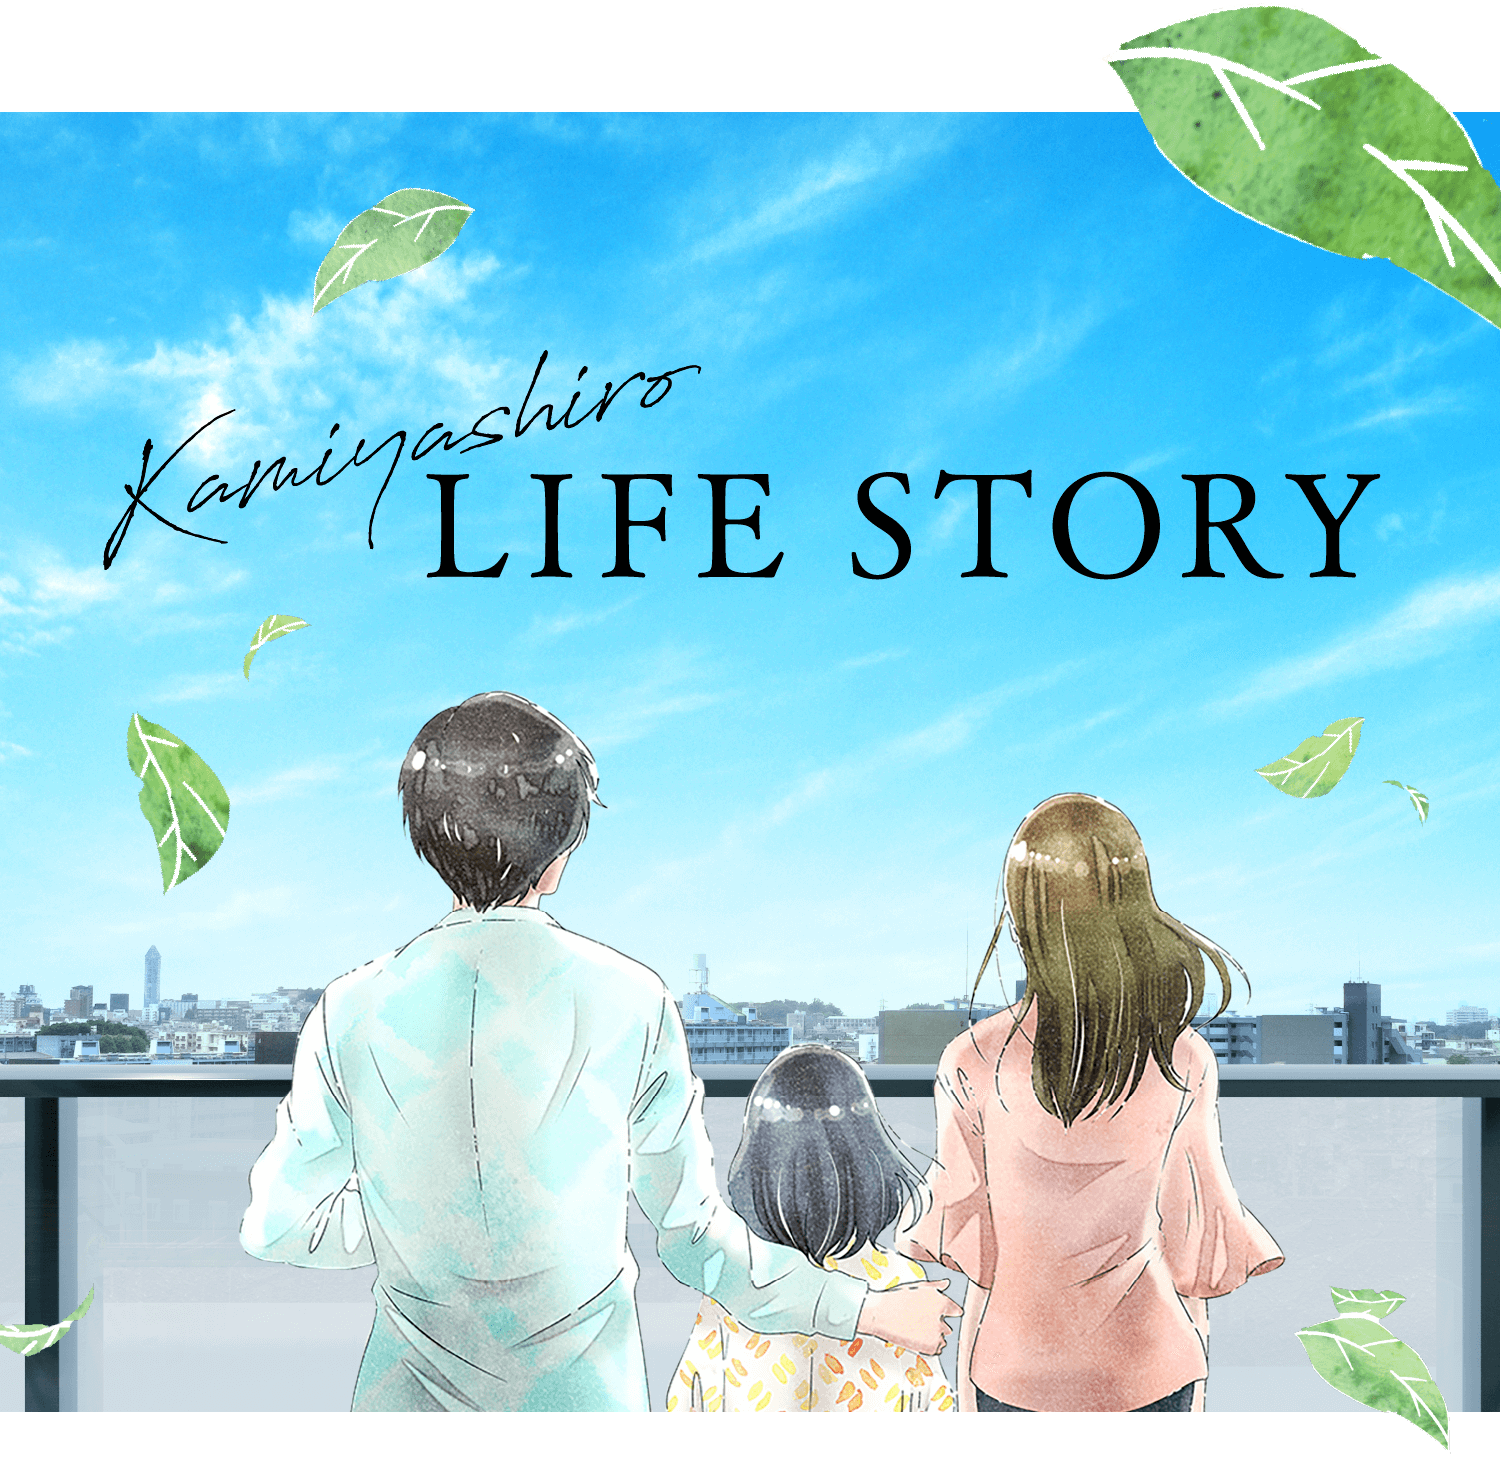 Kamiyashiro LIFE STORY